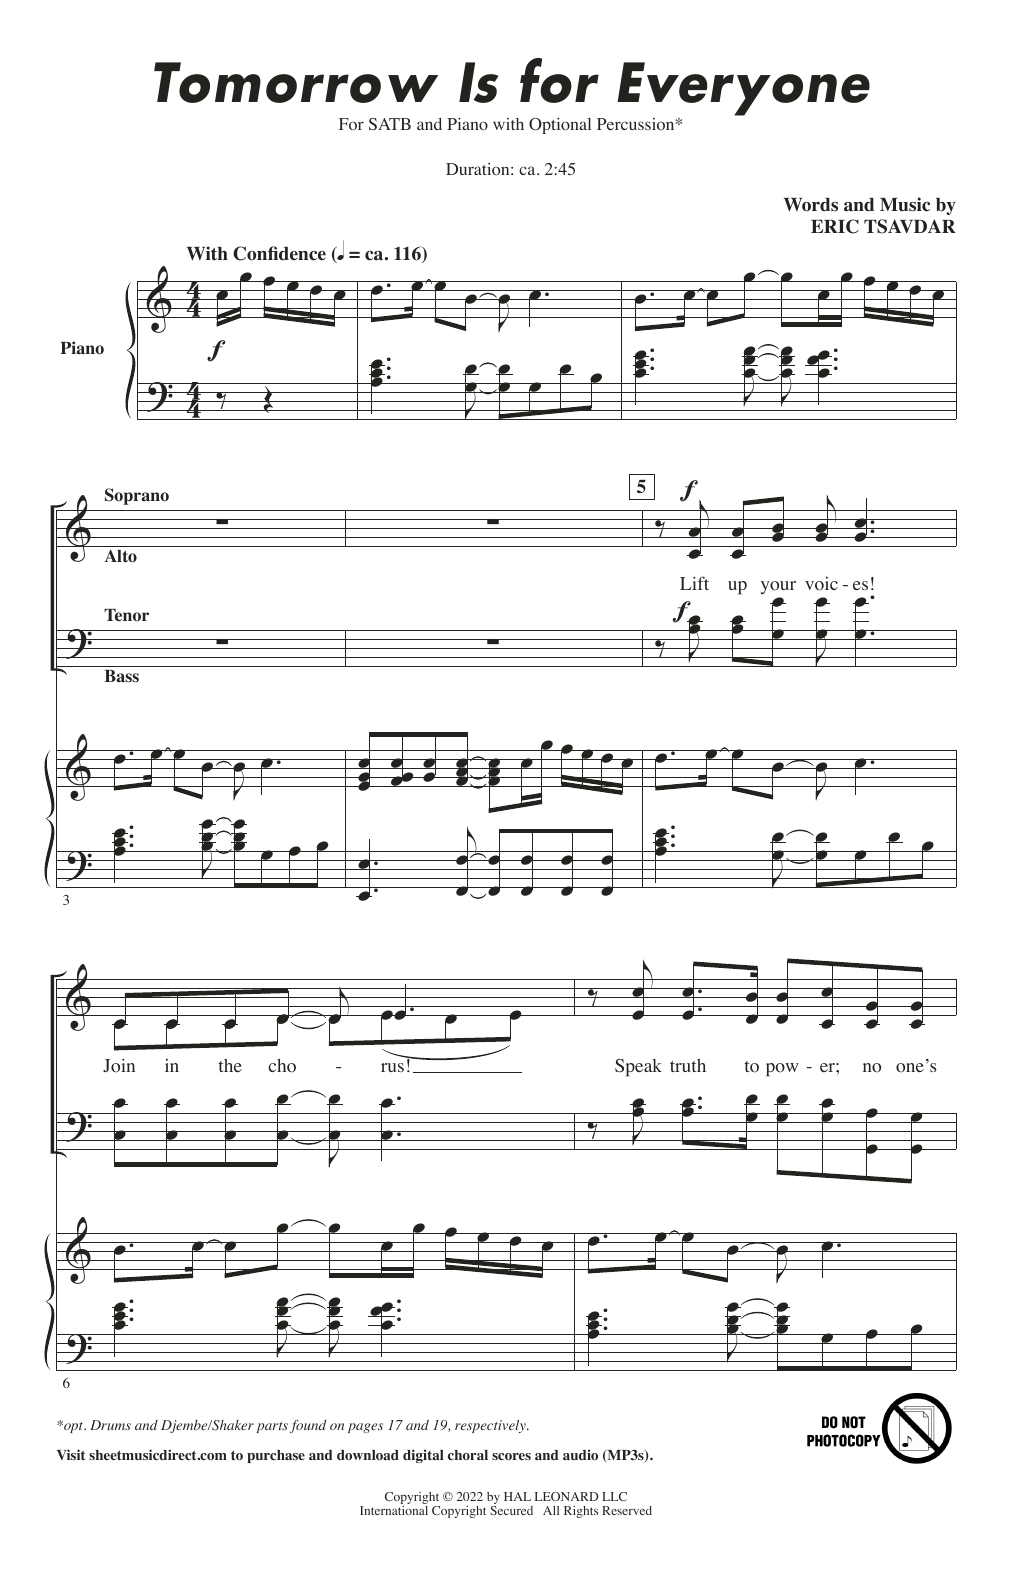 Eric Tsavdar Tomorrow Is For Everyone Sheet Music Notes & Chords for SATB Choir - Download or Print PDF